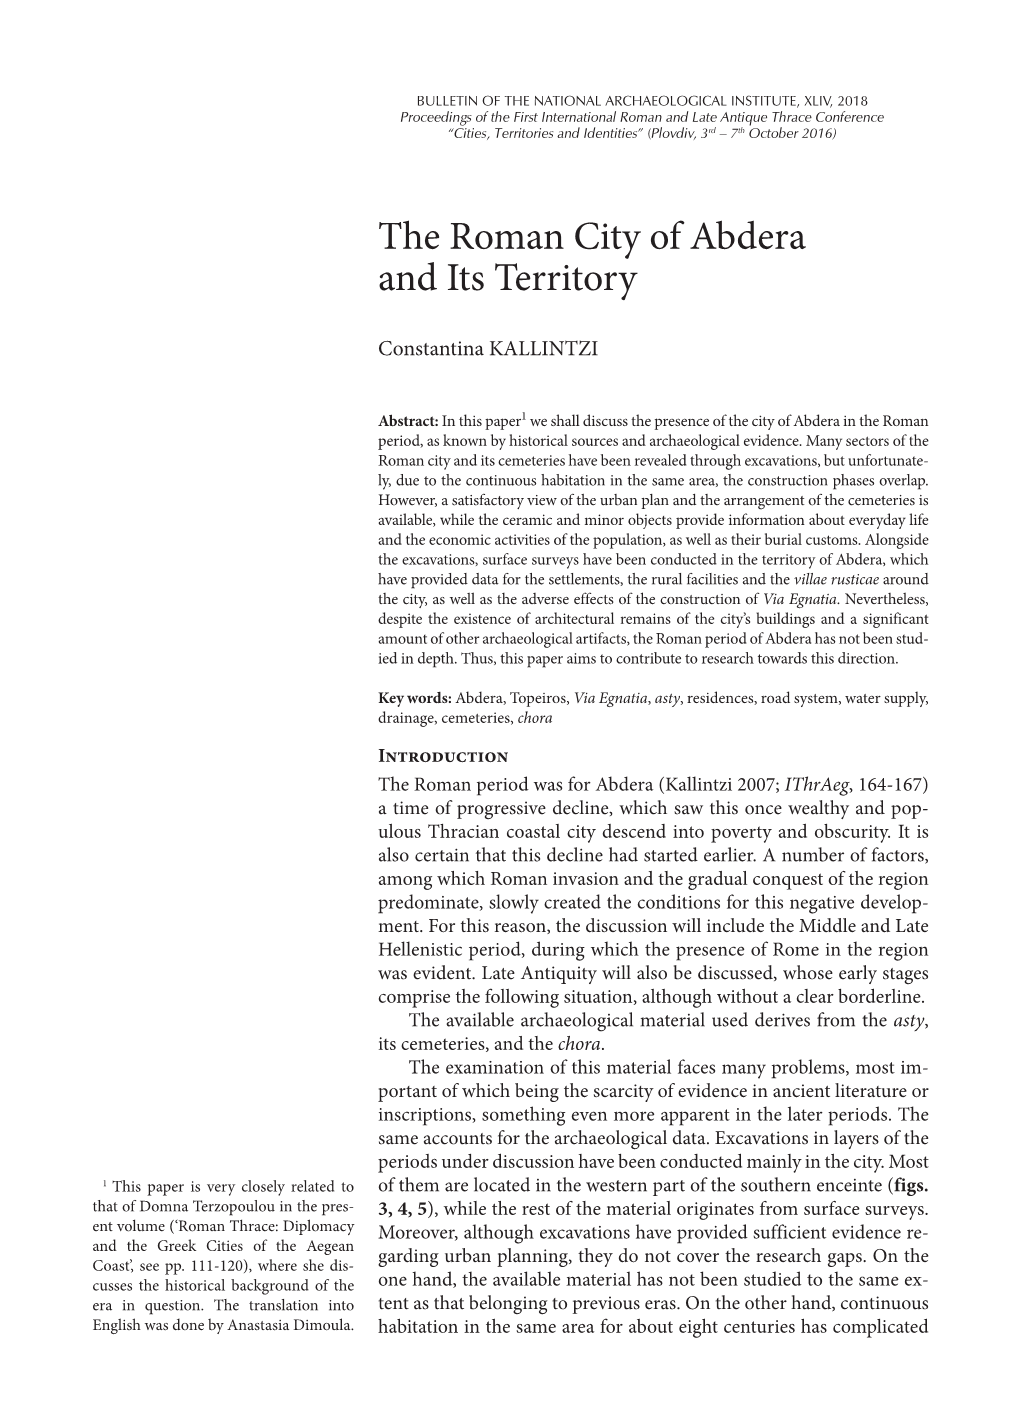 The Roman City of Abdera and Its Territory